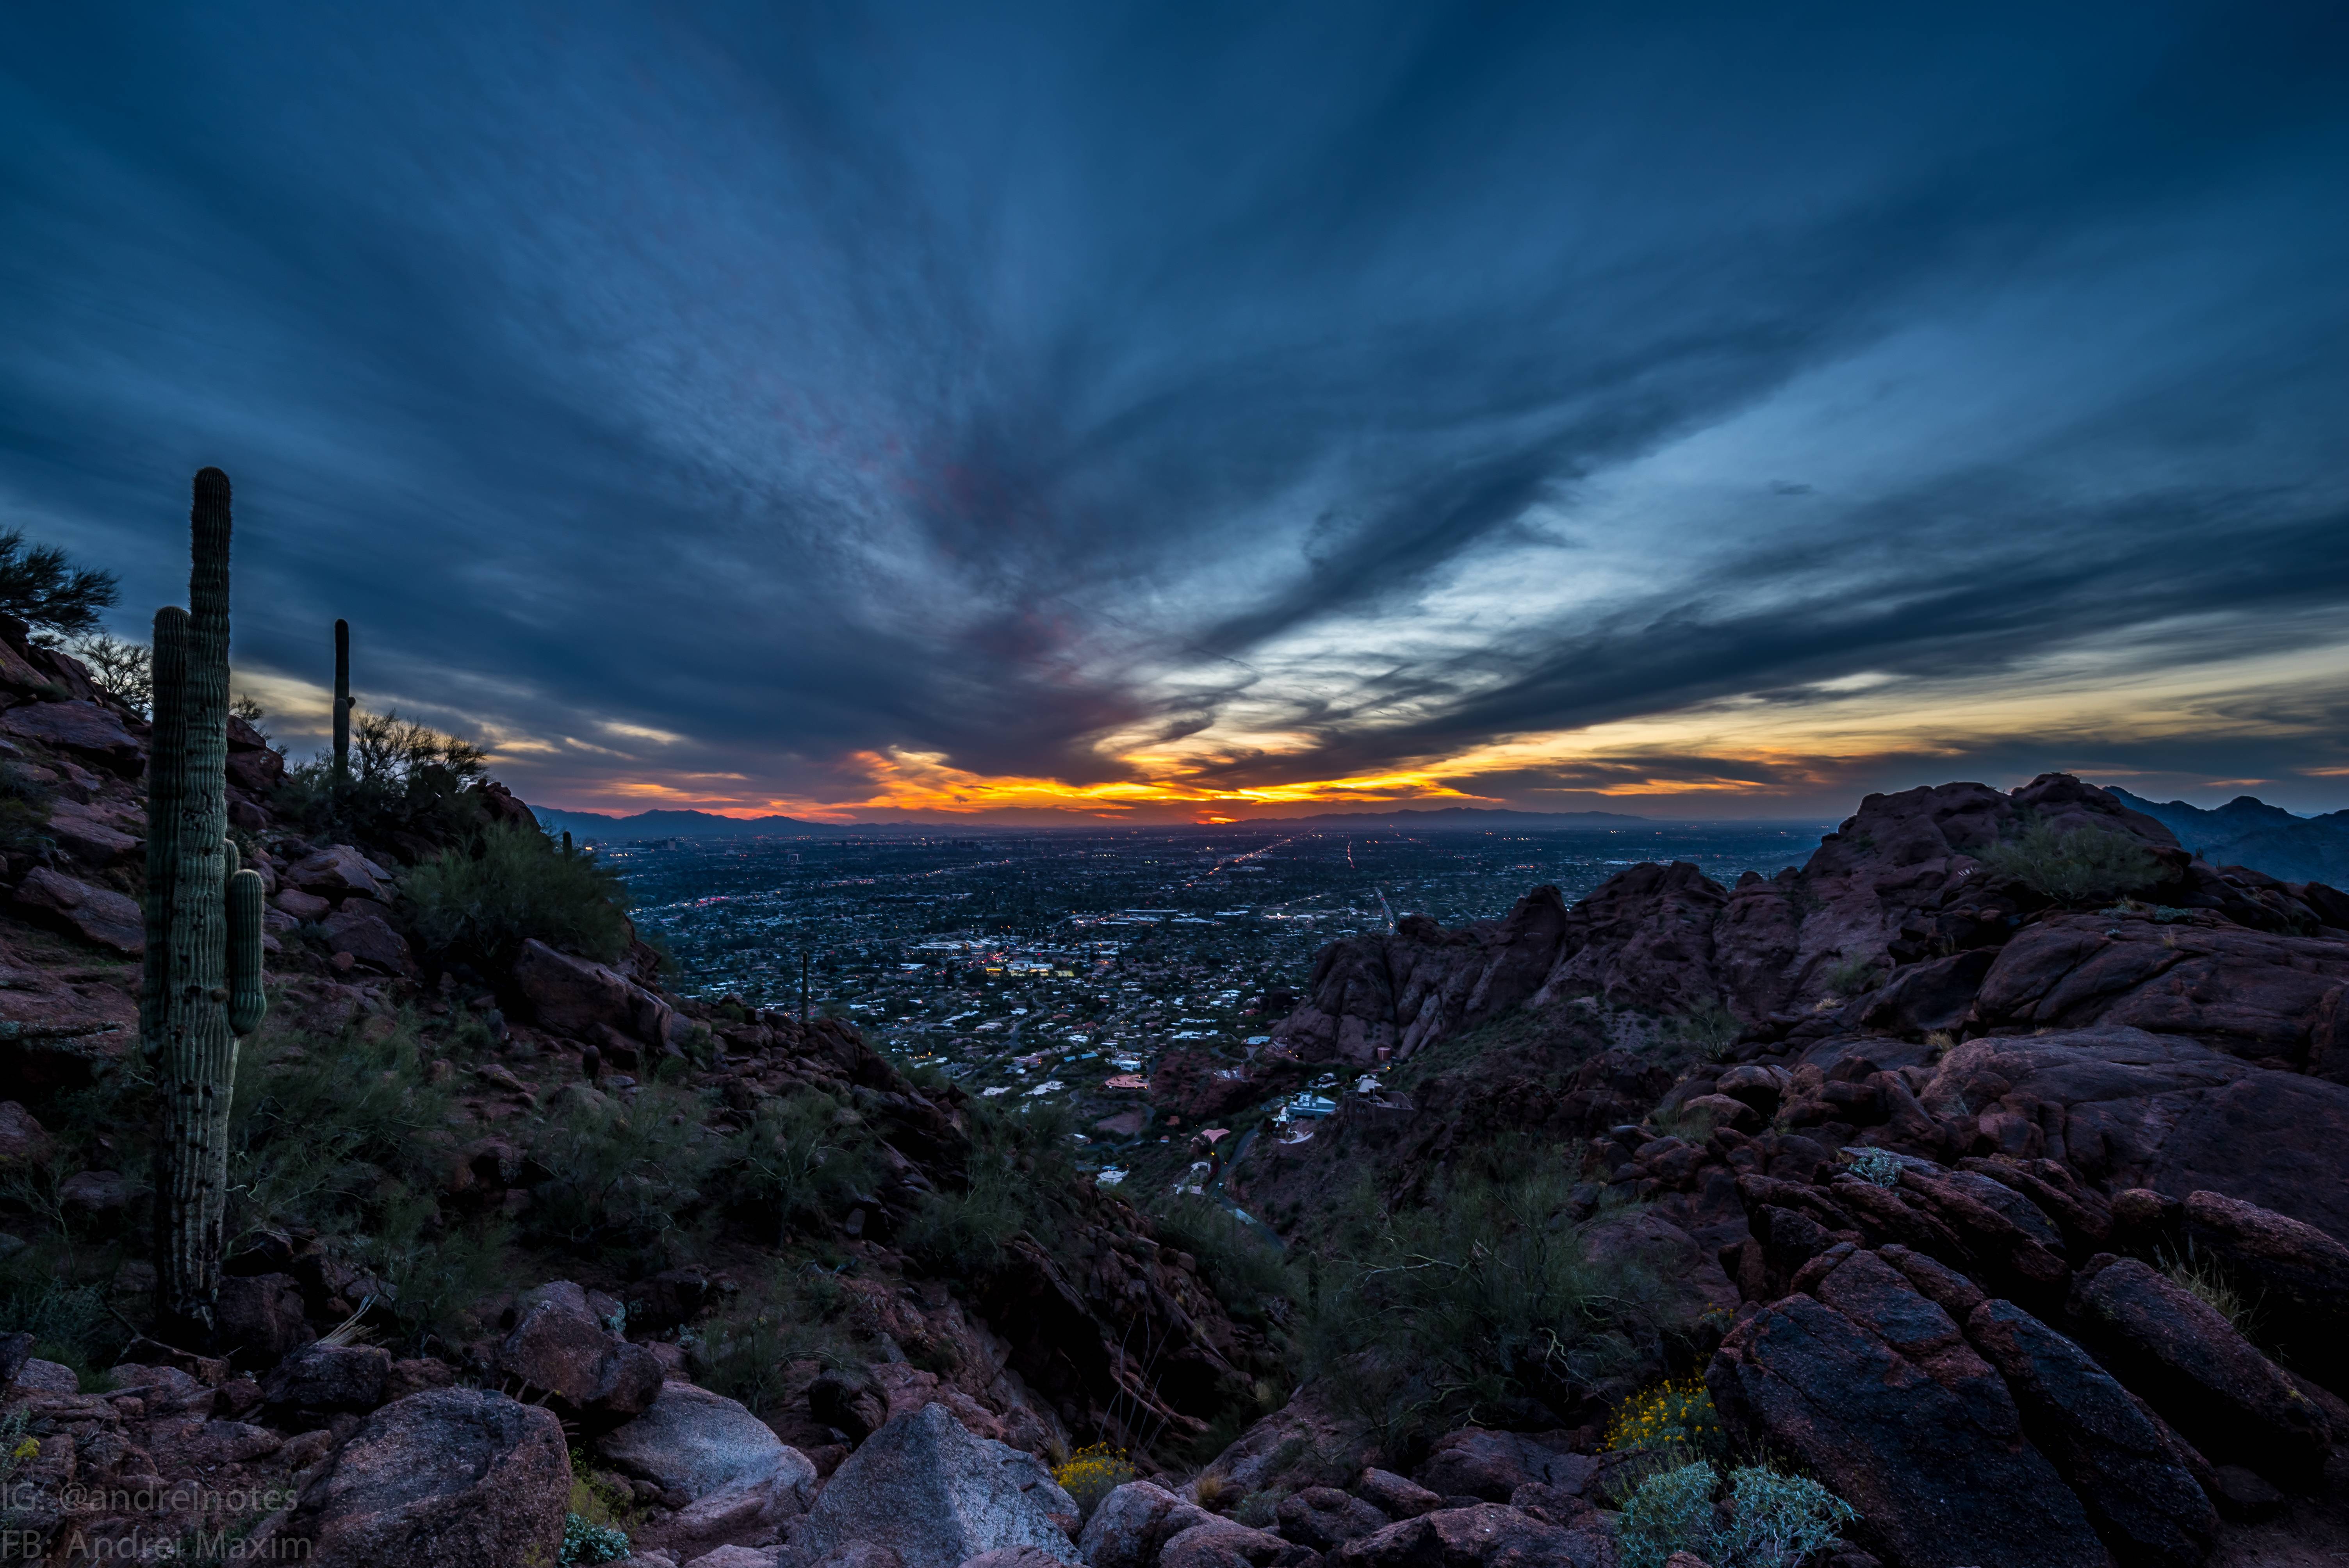 Sunset tonight at the Camelback mountain, Phoenix, Arizona